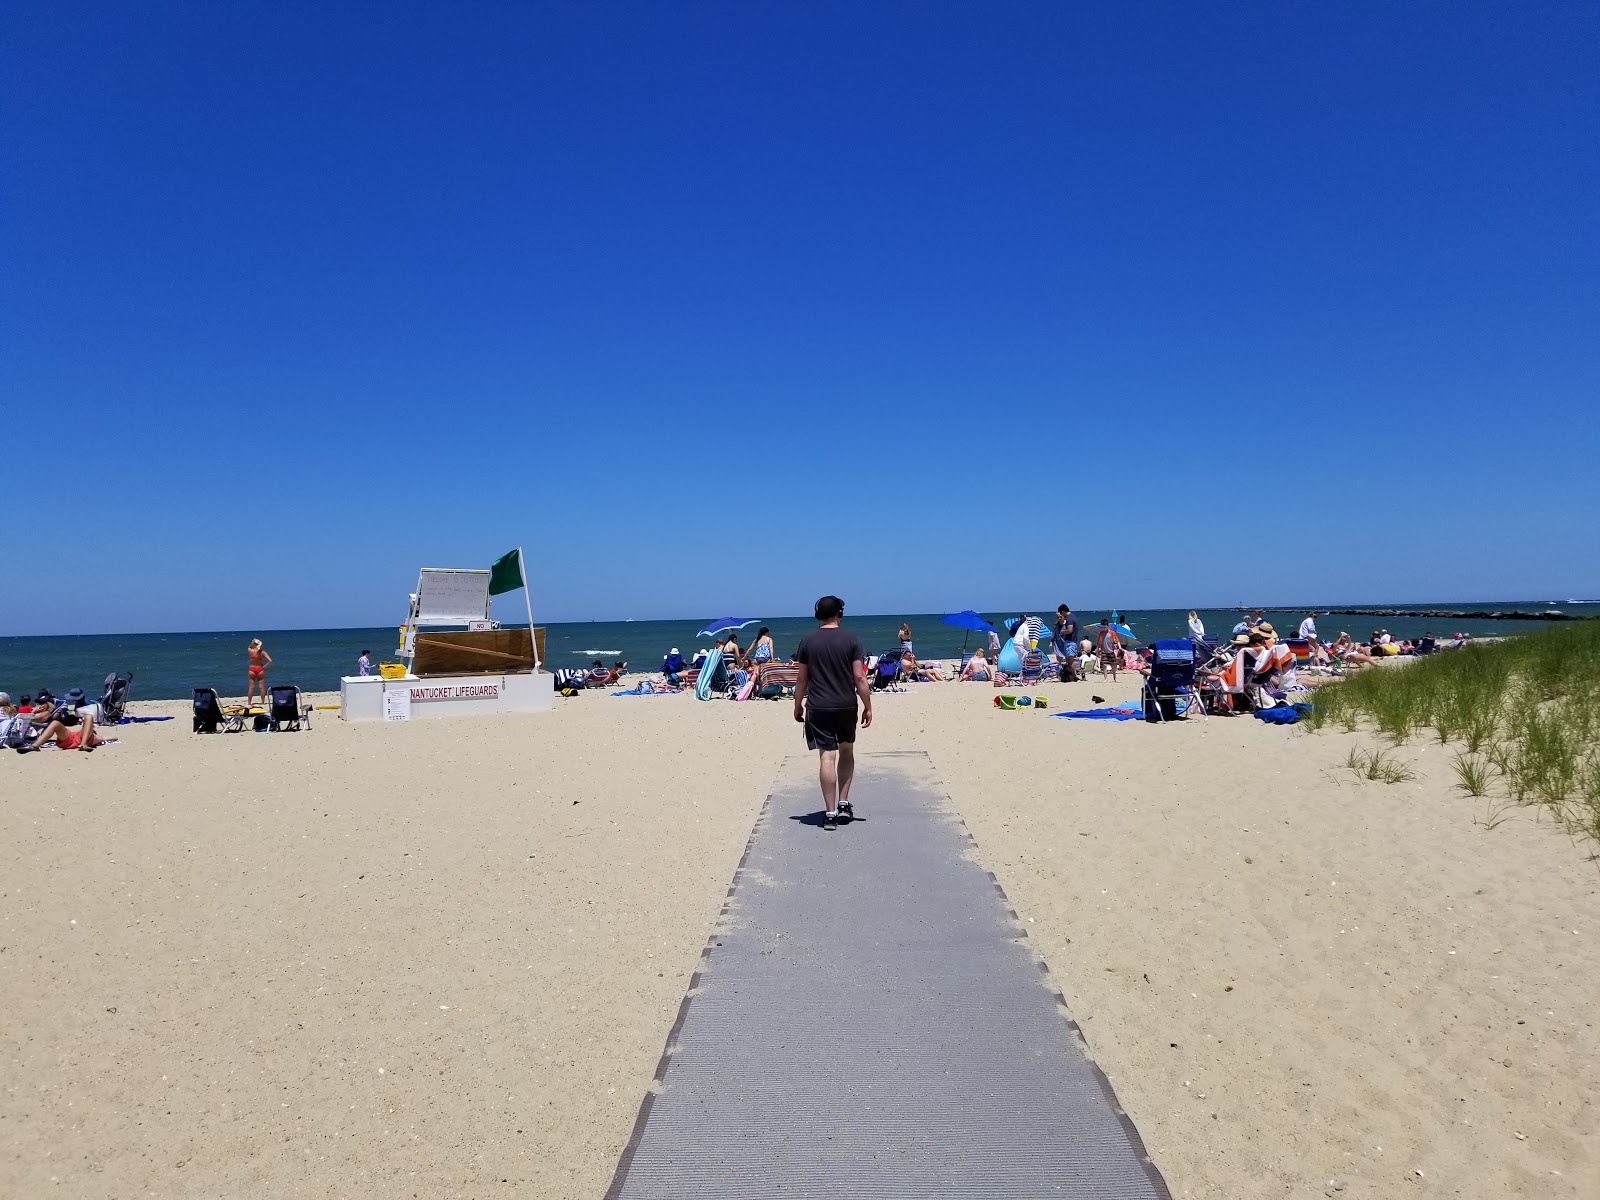 Foto de Jetties Beach - lugar popular entre os apreciadores de relaxamento